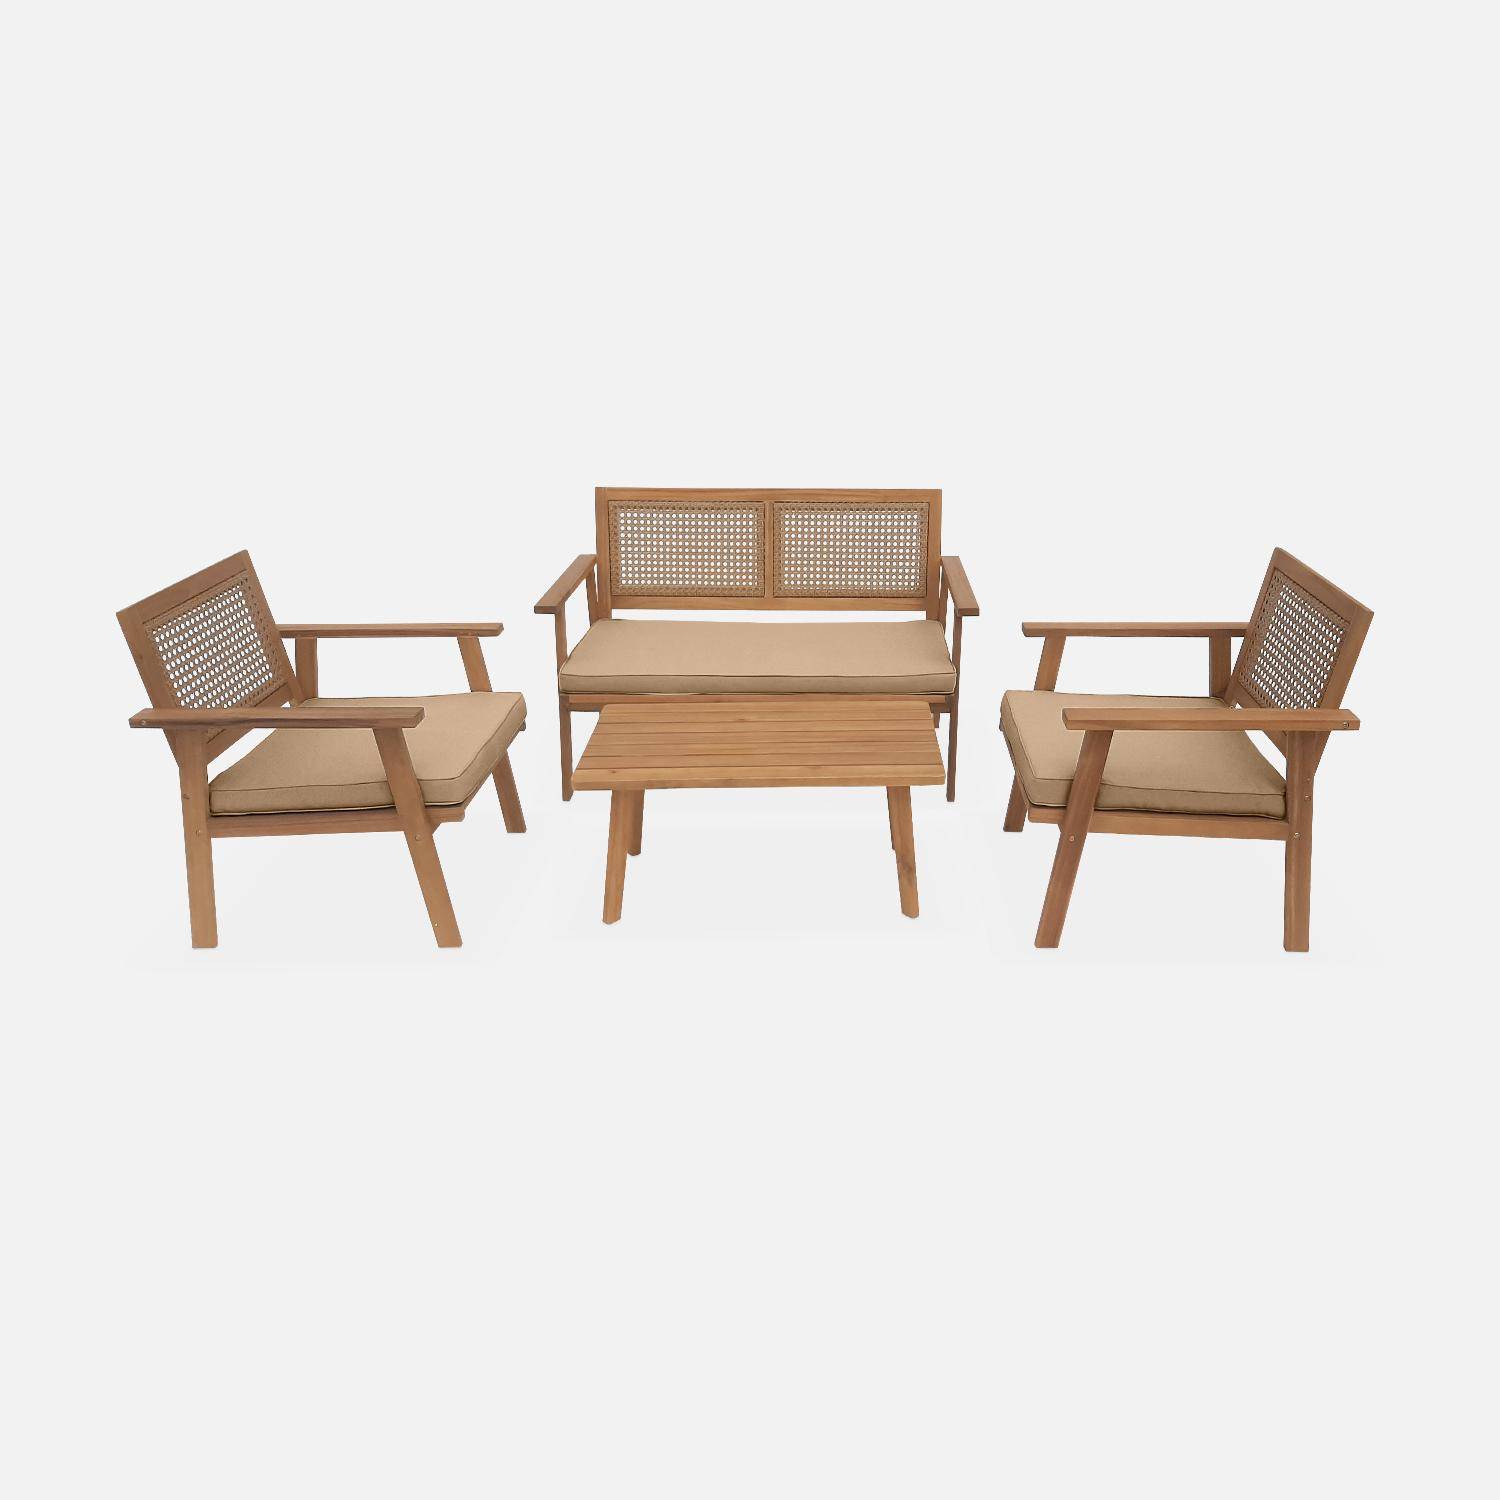 4-seater wood and cane rattan garden sofa set, Teak colour Photo4